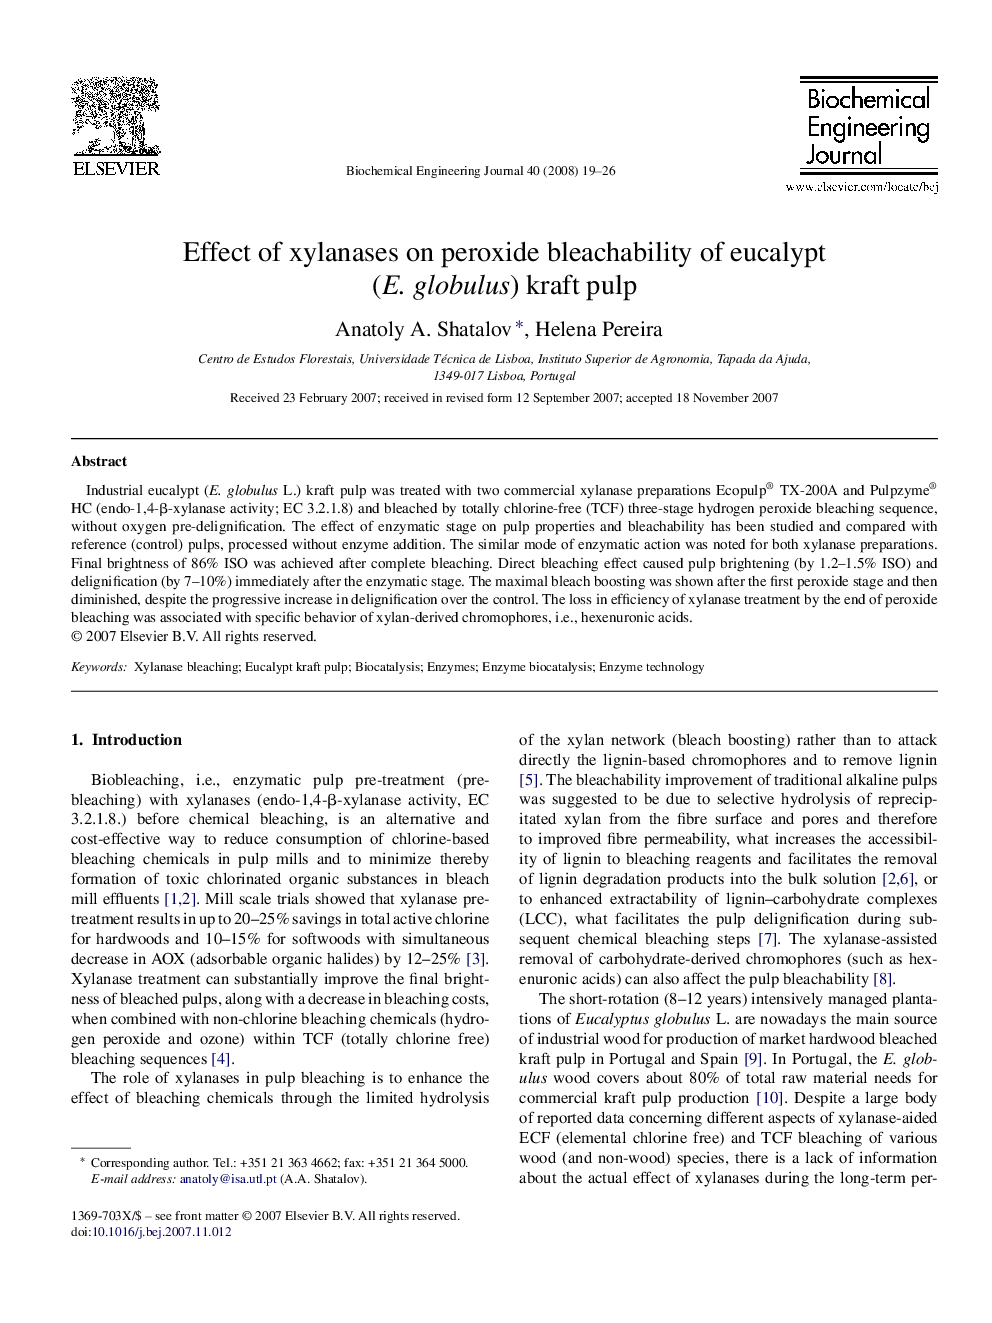 Effect of xylanases on peroxide bleachability of eucalypt (E. globulus) kraft pulp